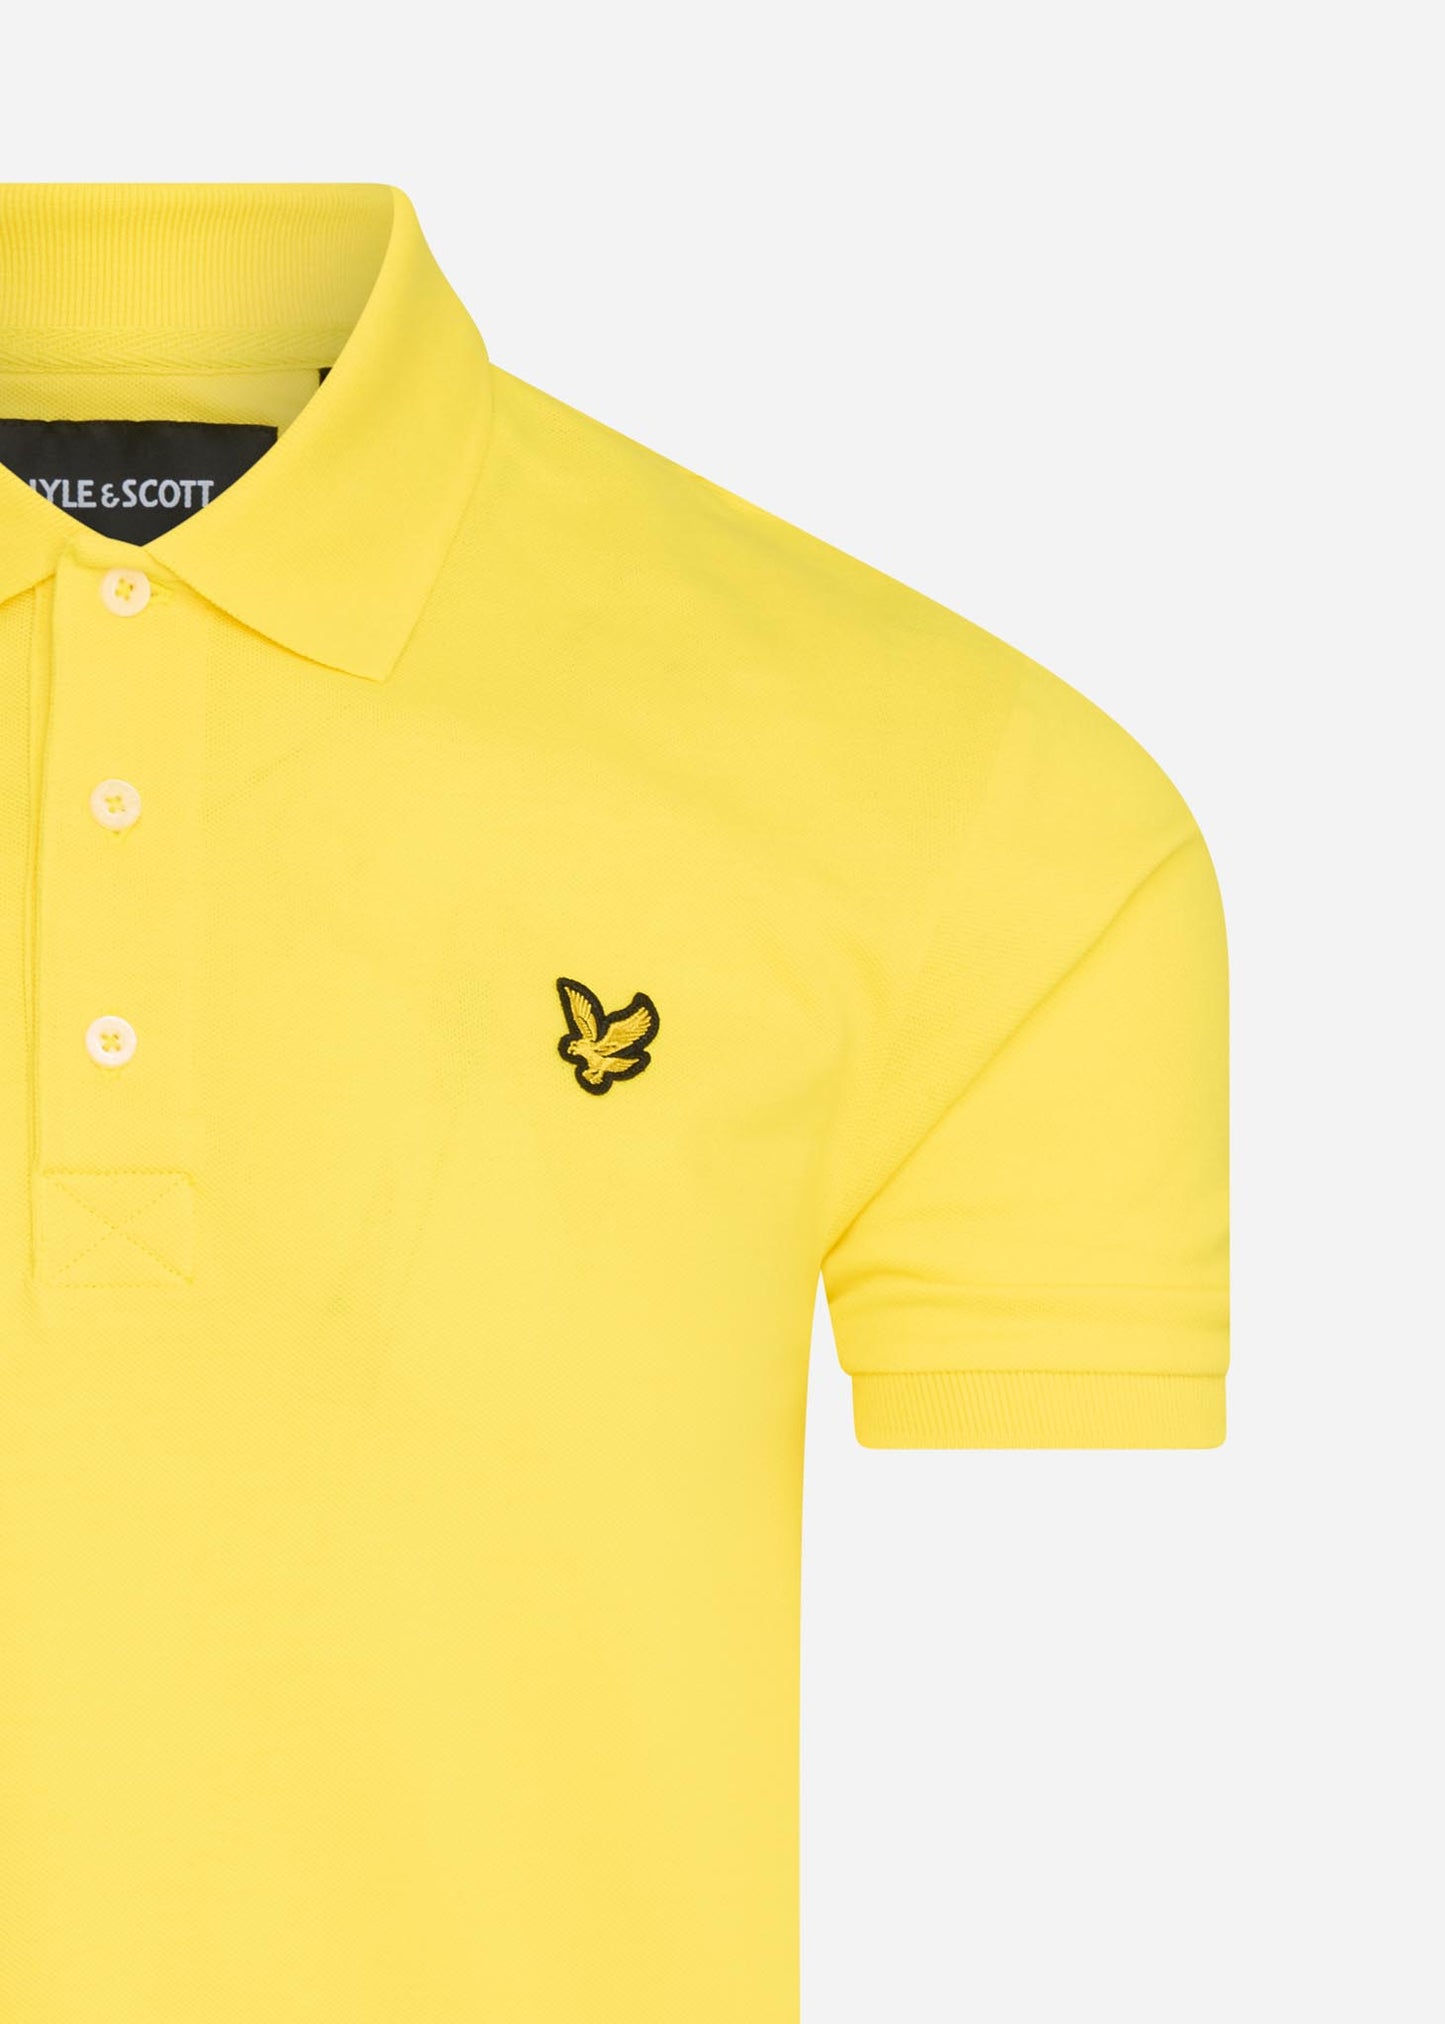 Plain polo shirt - buttercup yellow